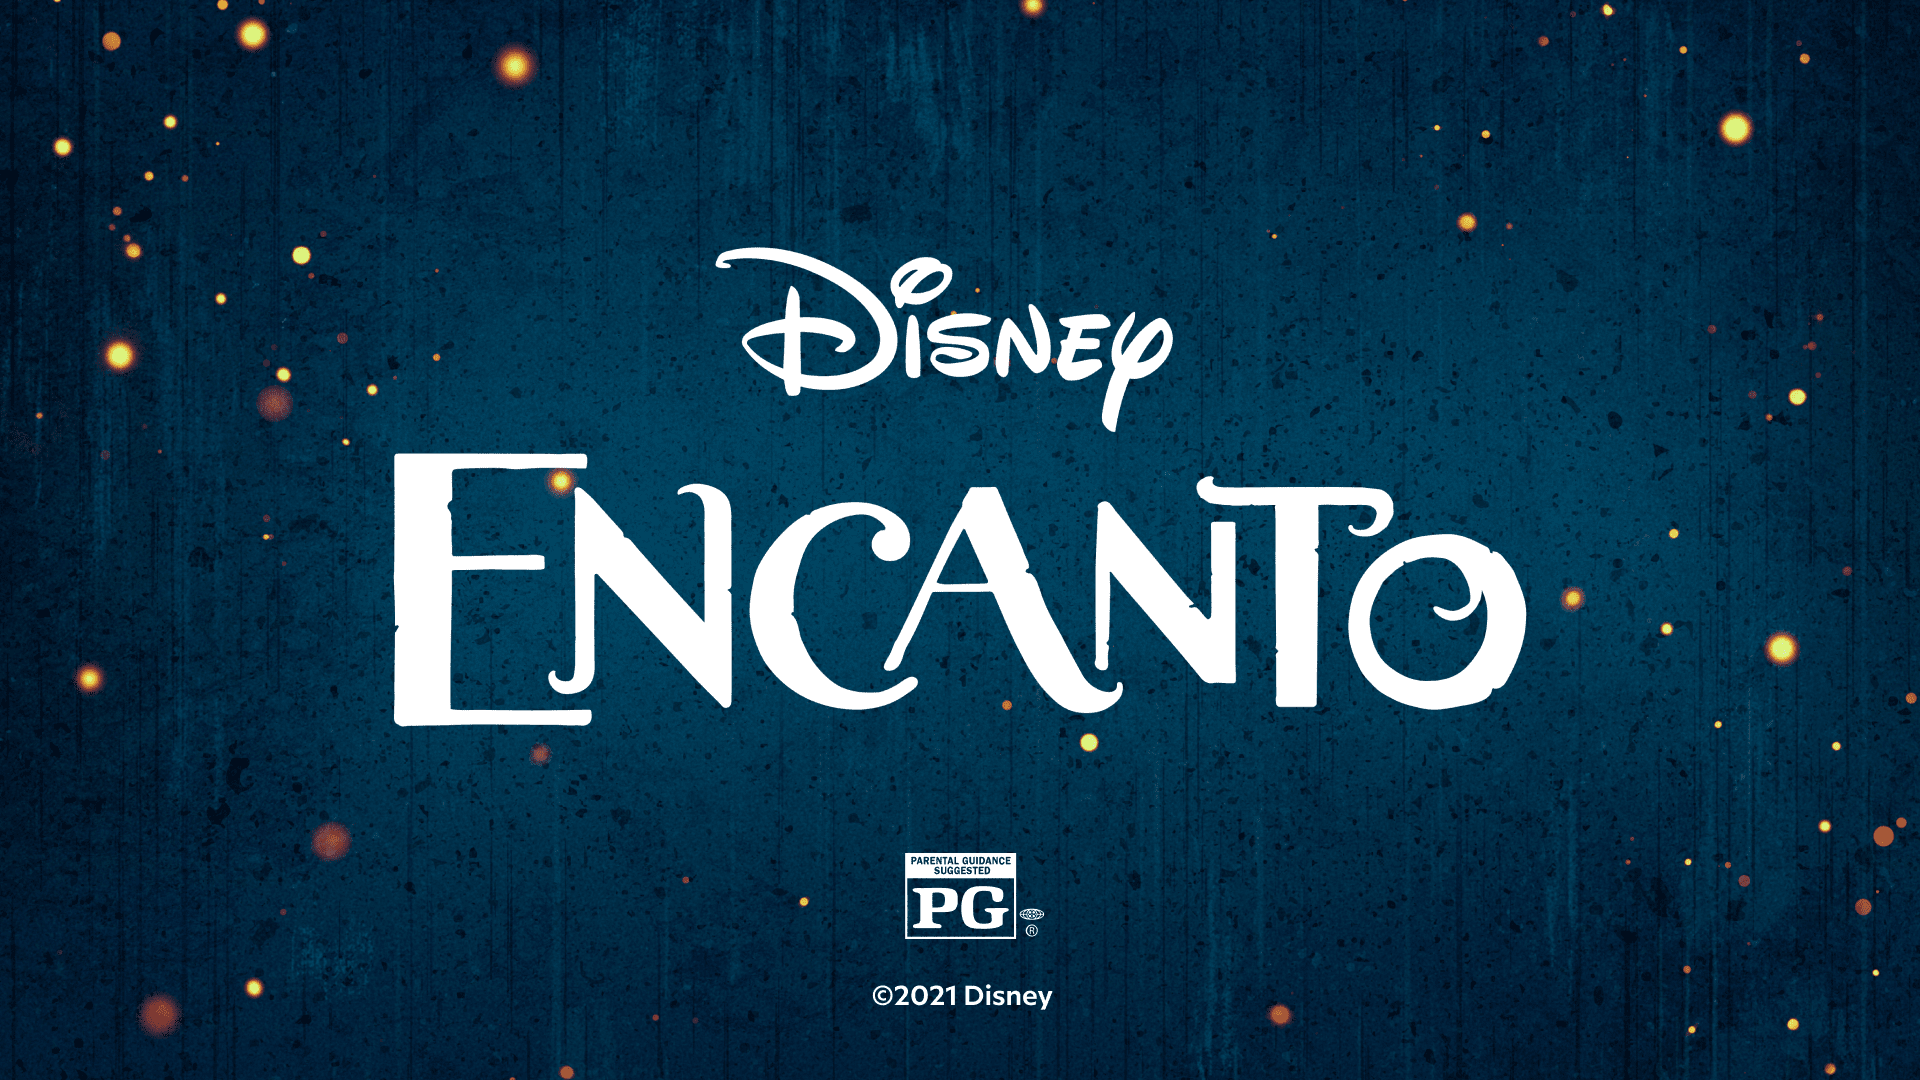 Disney Encanto - Copyright: ©2021 Disney